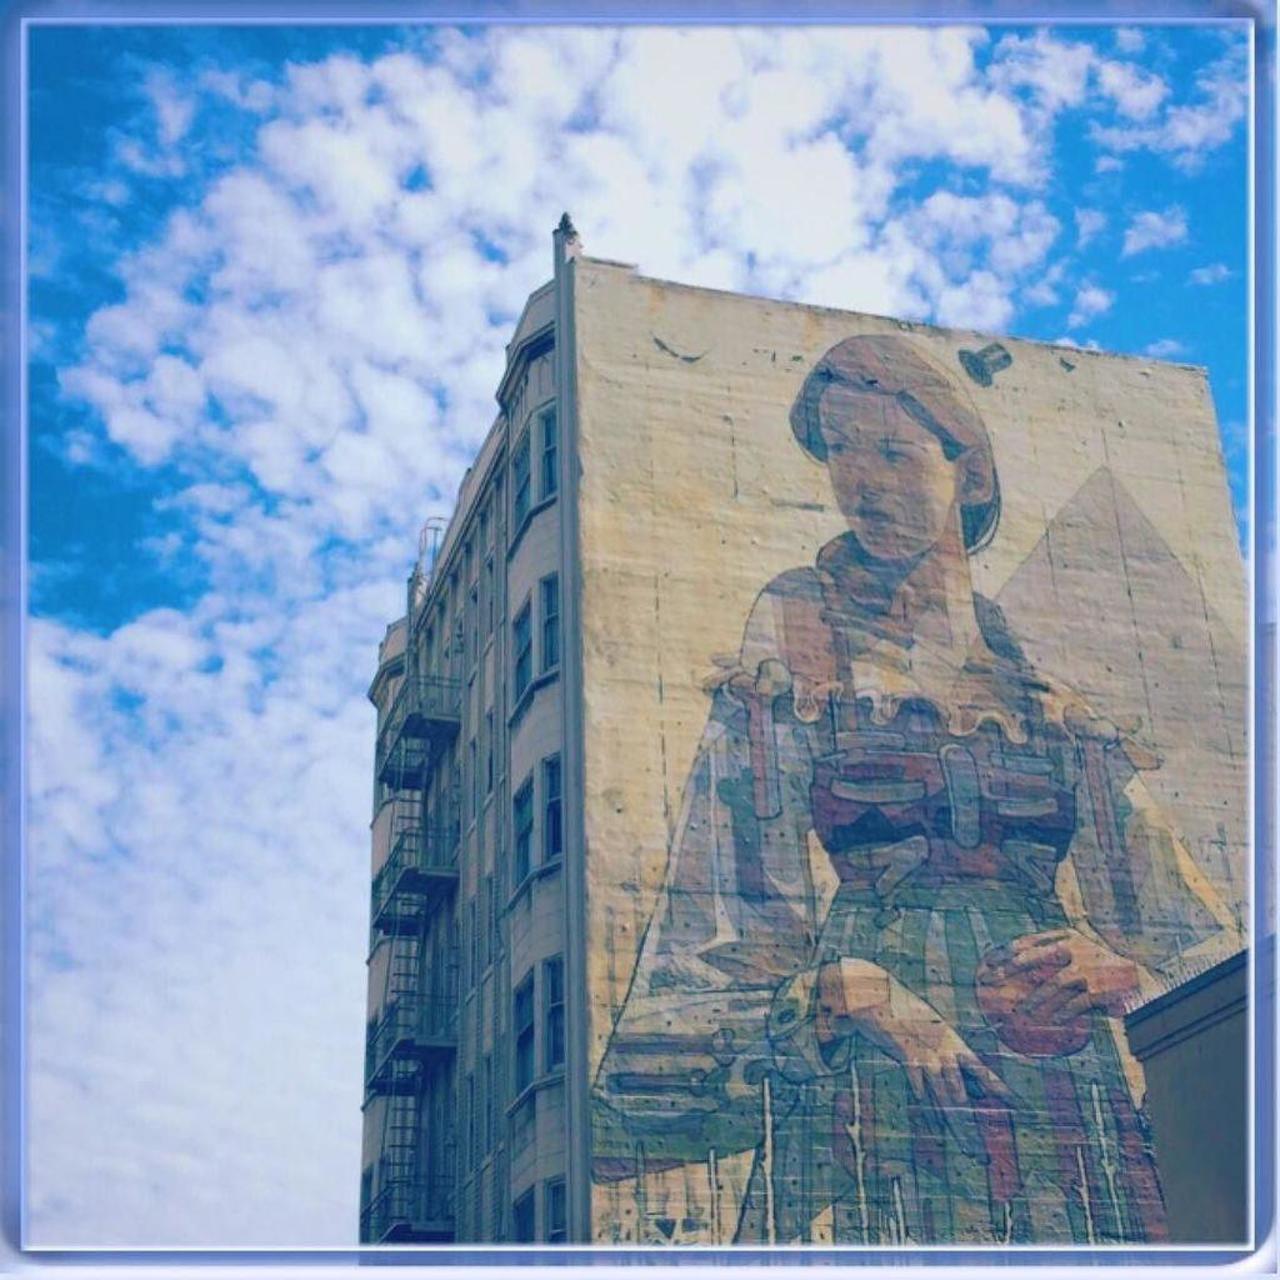 #mondaymorning time for work! #riseandshine #art #graffiti #sanfrancisco #california #polkstreet #streetart #bluesk… http://t.co/DAYid4GpAI